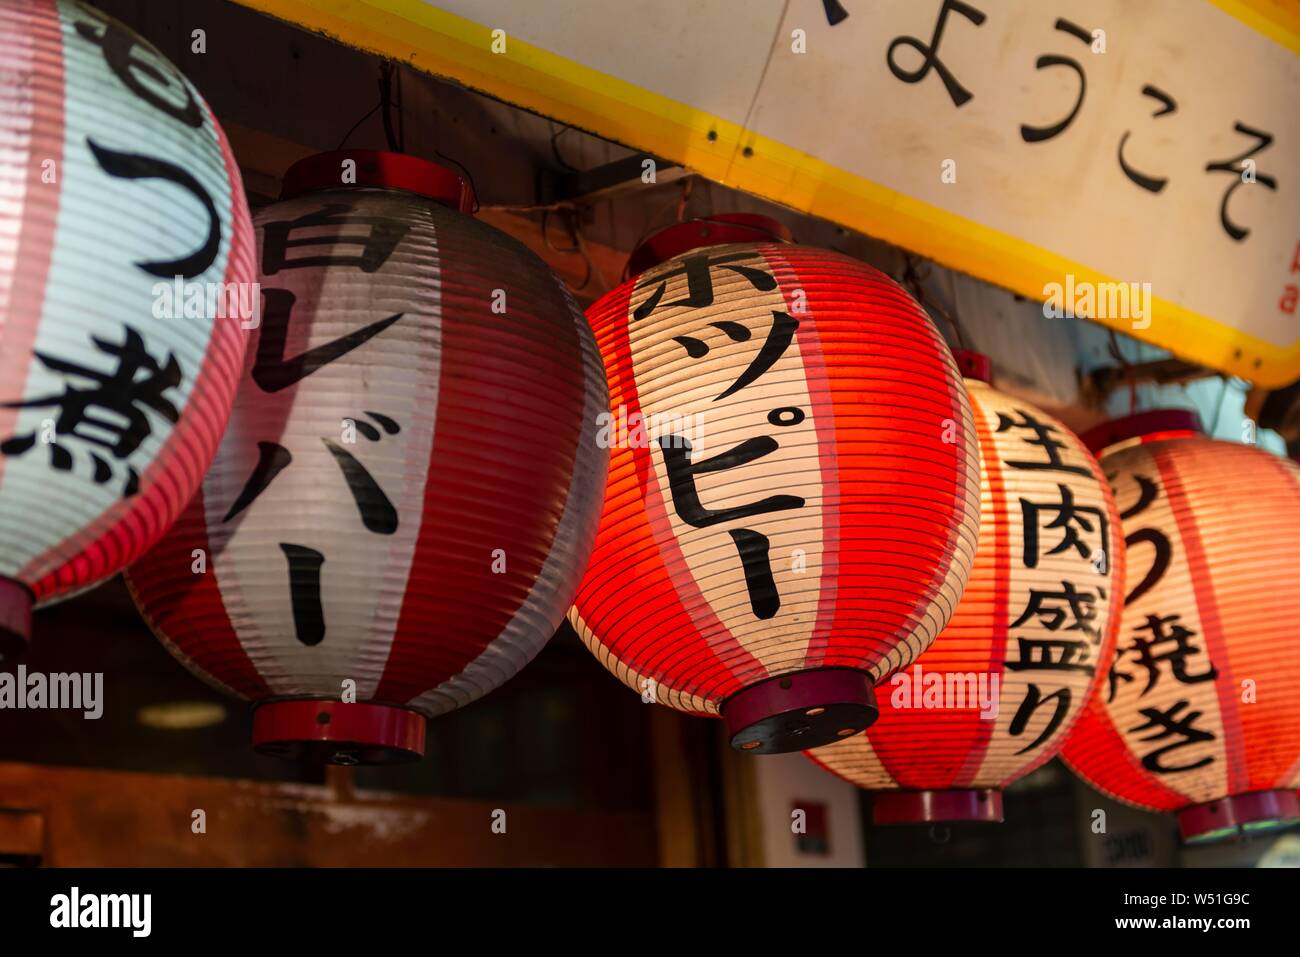 Lanterne sospese fianco a fianco, lanterne con i caratteri giapponesi, Shibuya, Udagawacho, Tokyo, Giappone Foto Stock